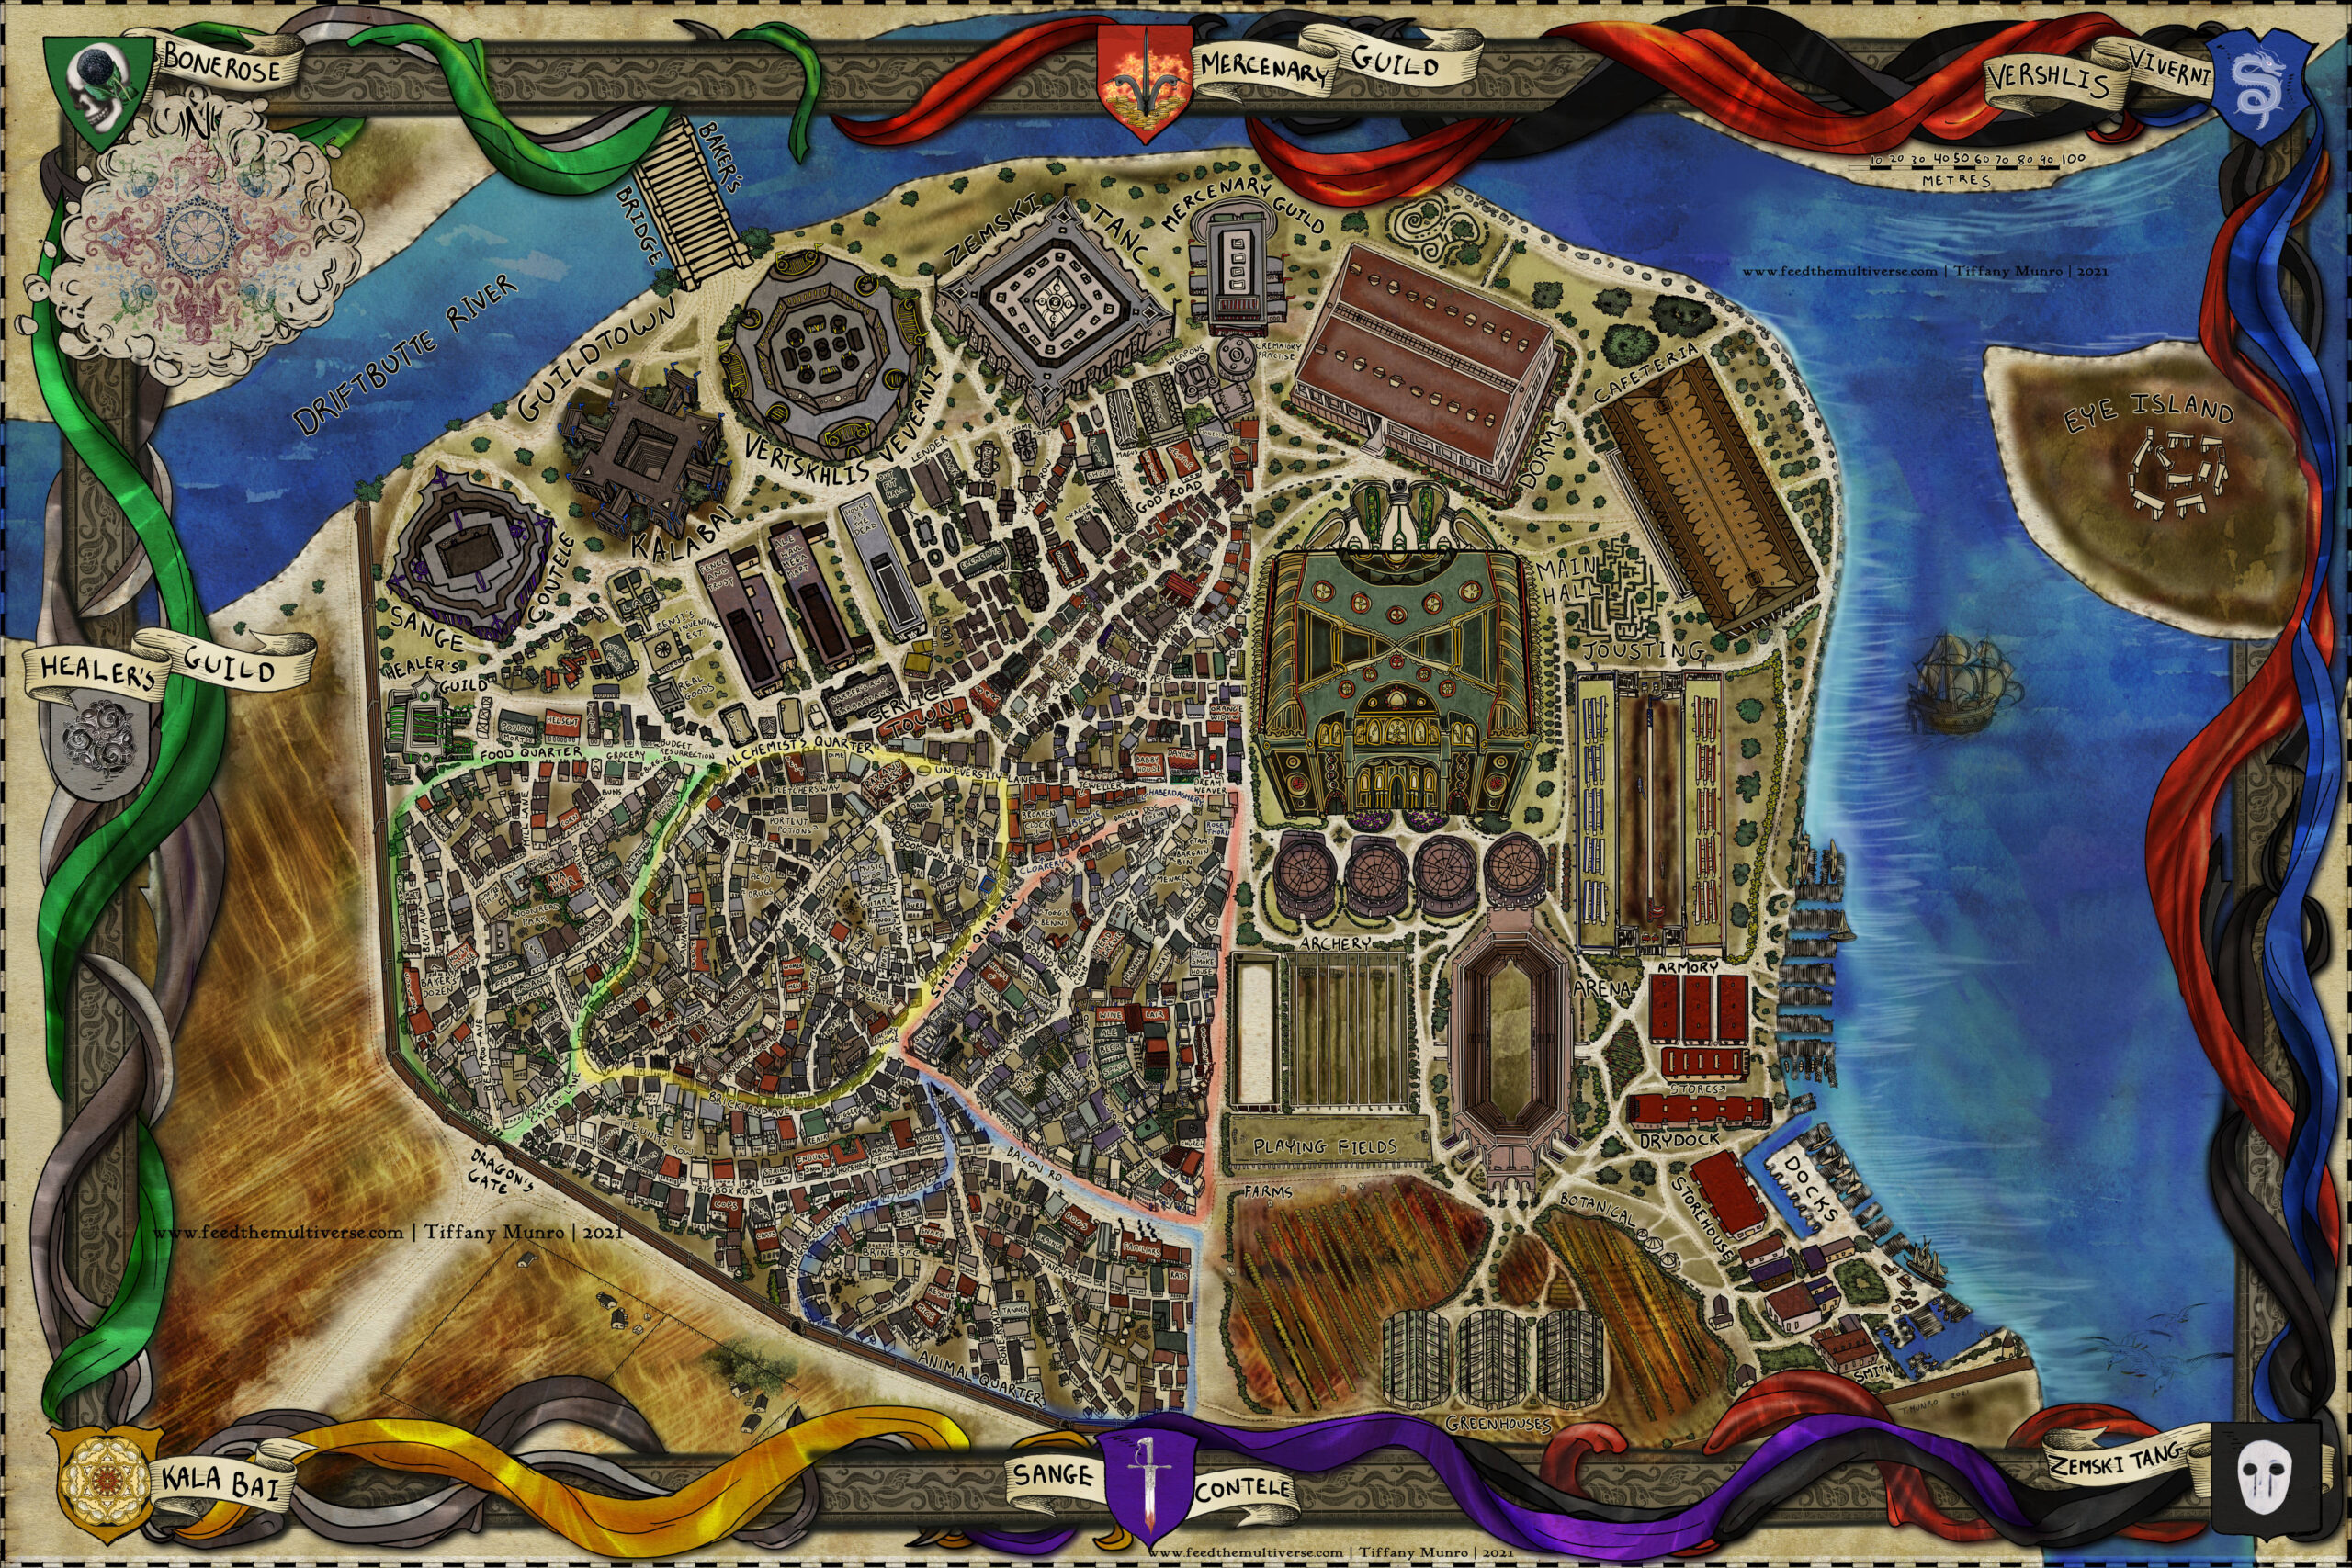 City of Bonerose Discord Ankh Morpork style city map fantasy cartography watercolor drawn inked style of map